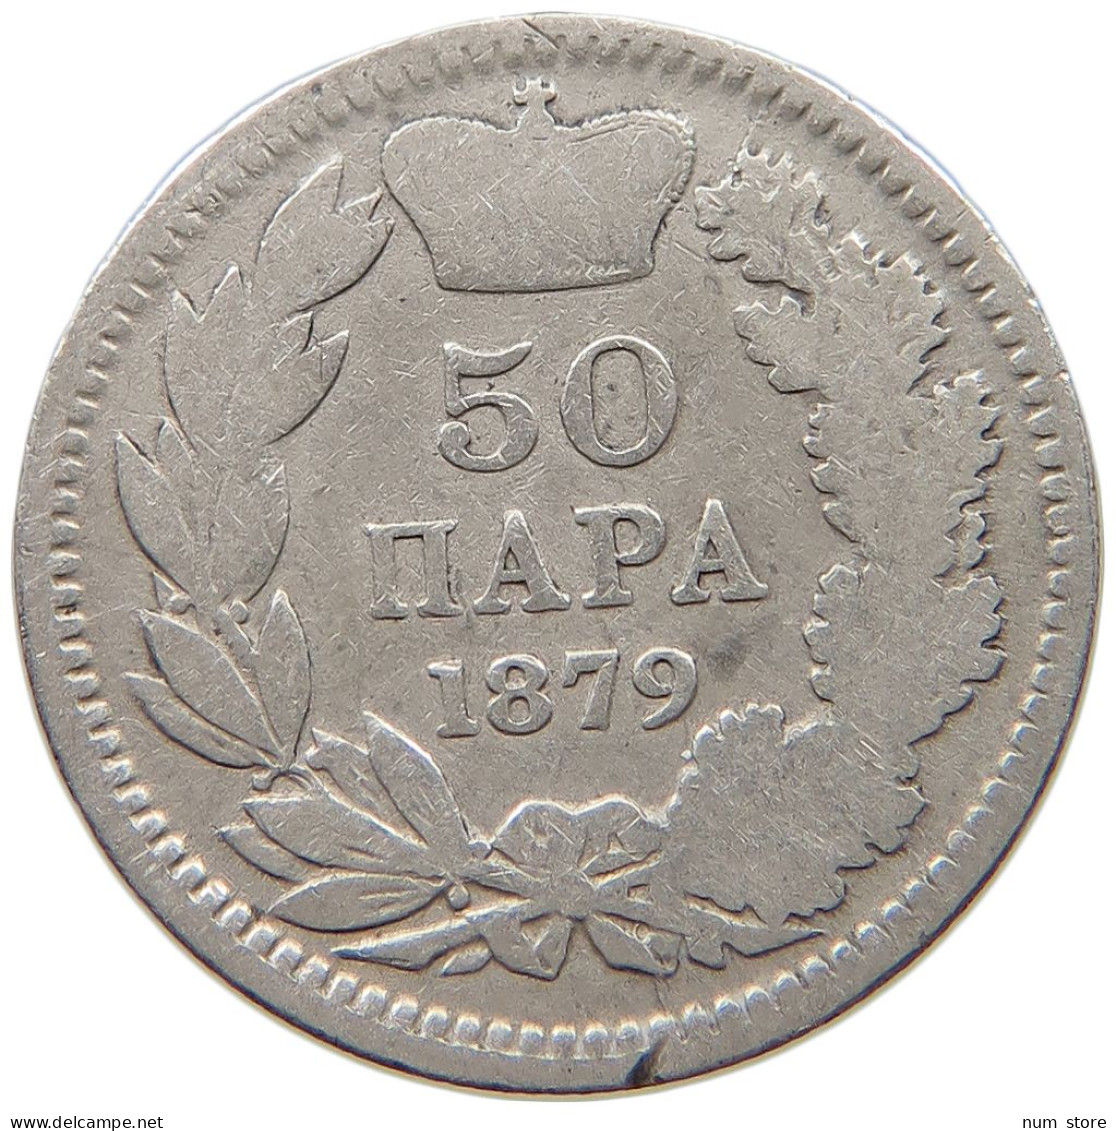 SERBIA 50 PARA 1879 Milan Obrenovic IV. (1868-1882) #c040 0457 - Serbia